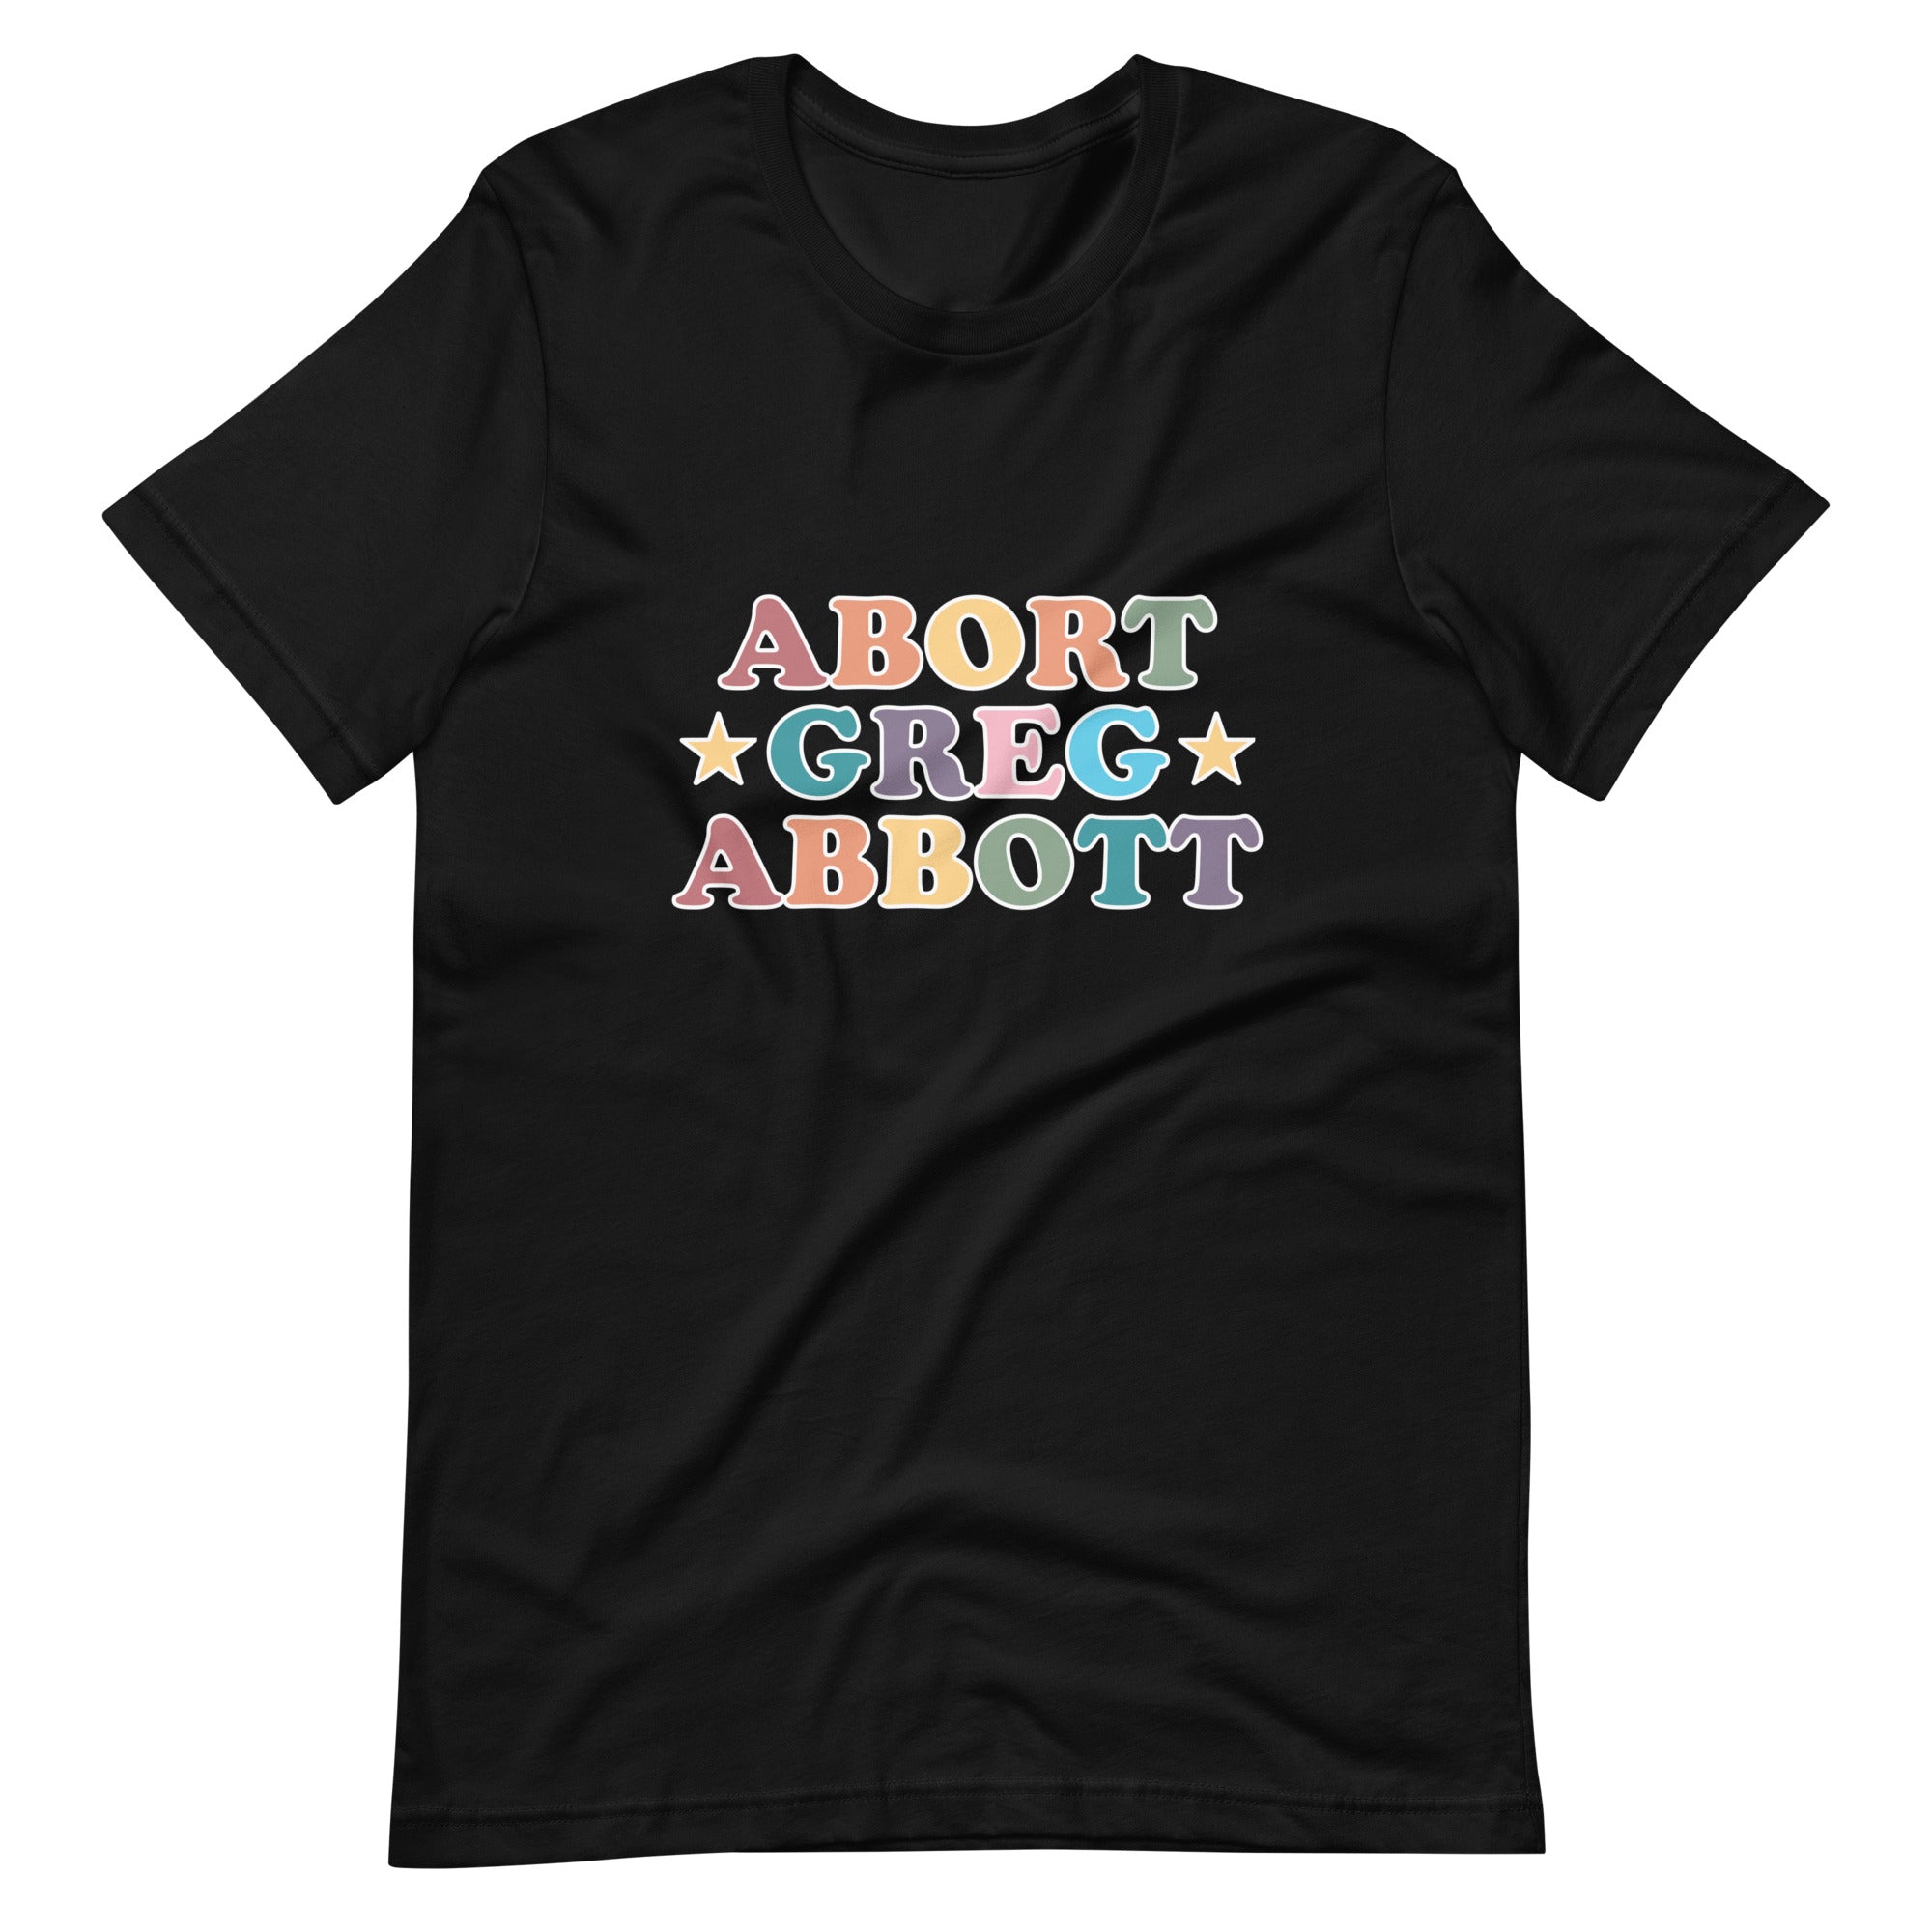 Abort Greg Abbott Unisex T-shirt